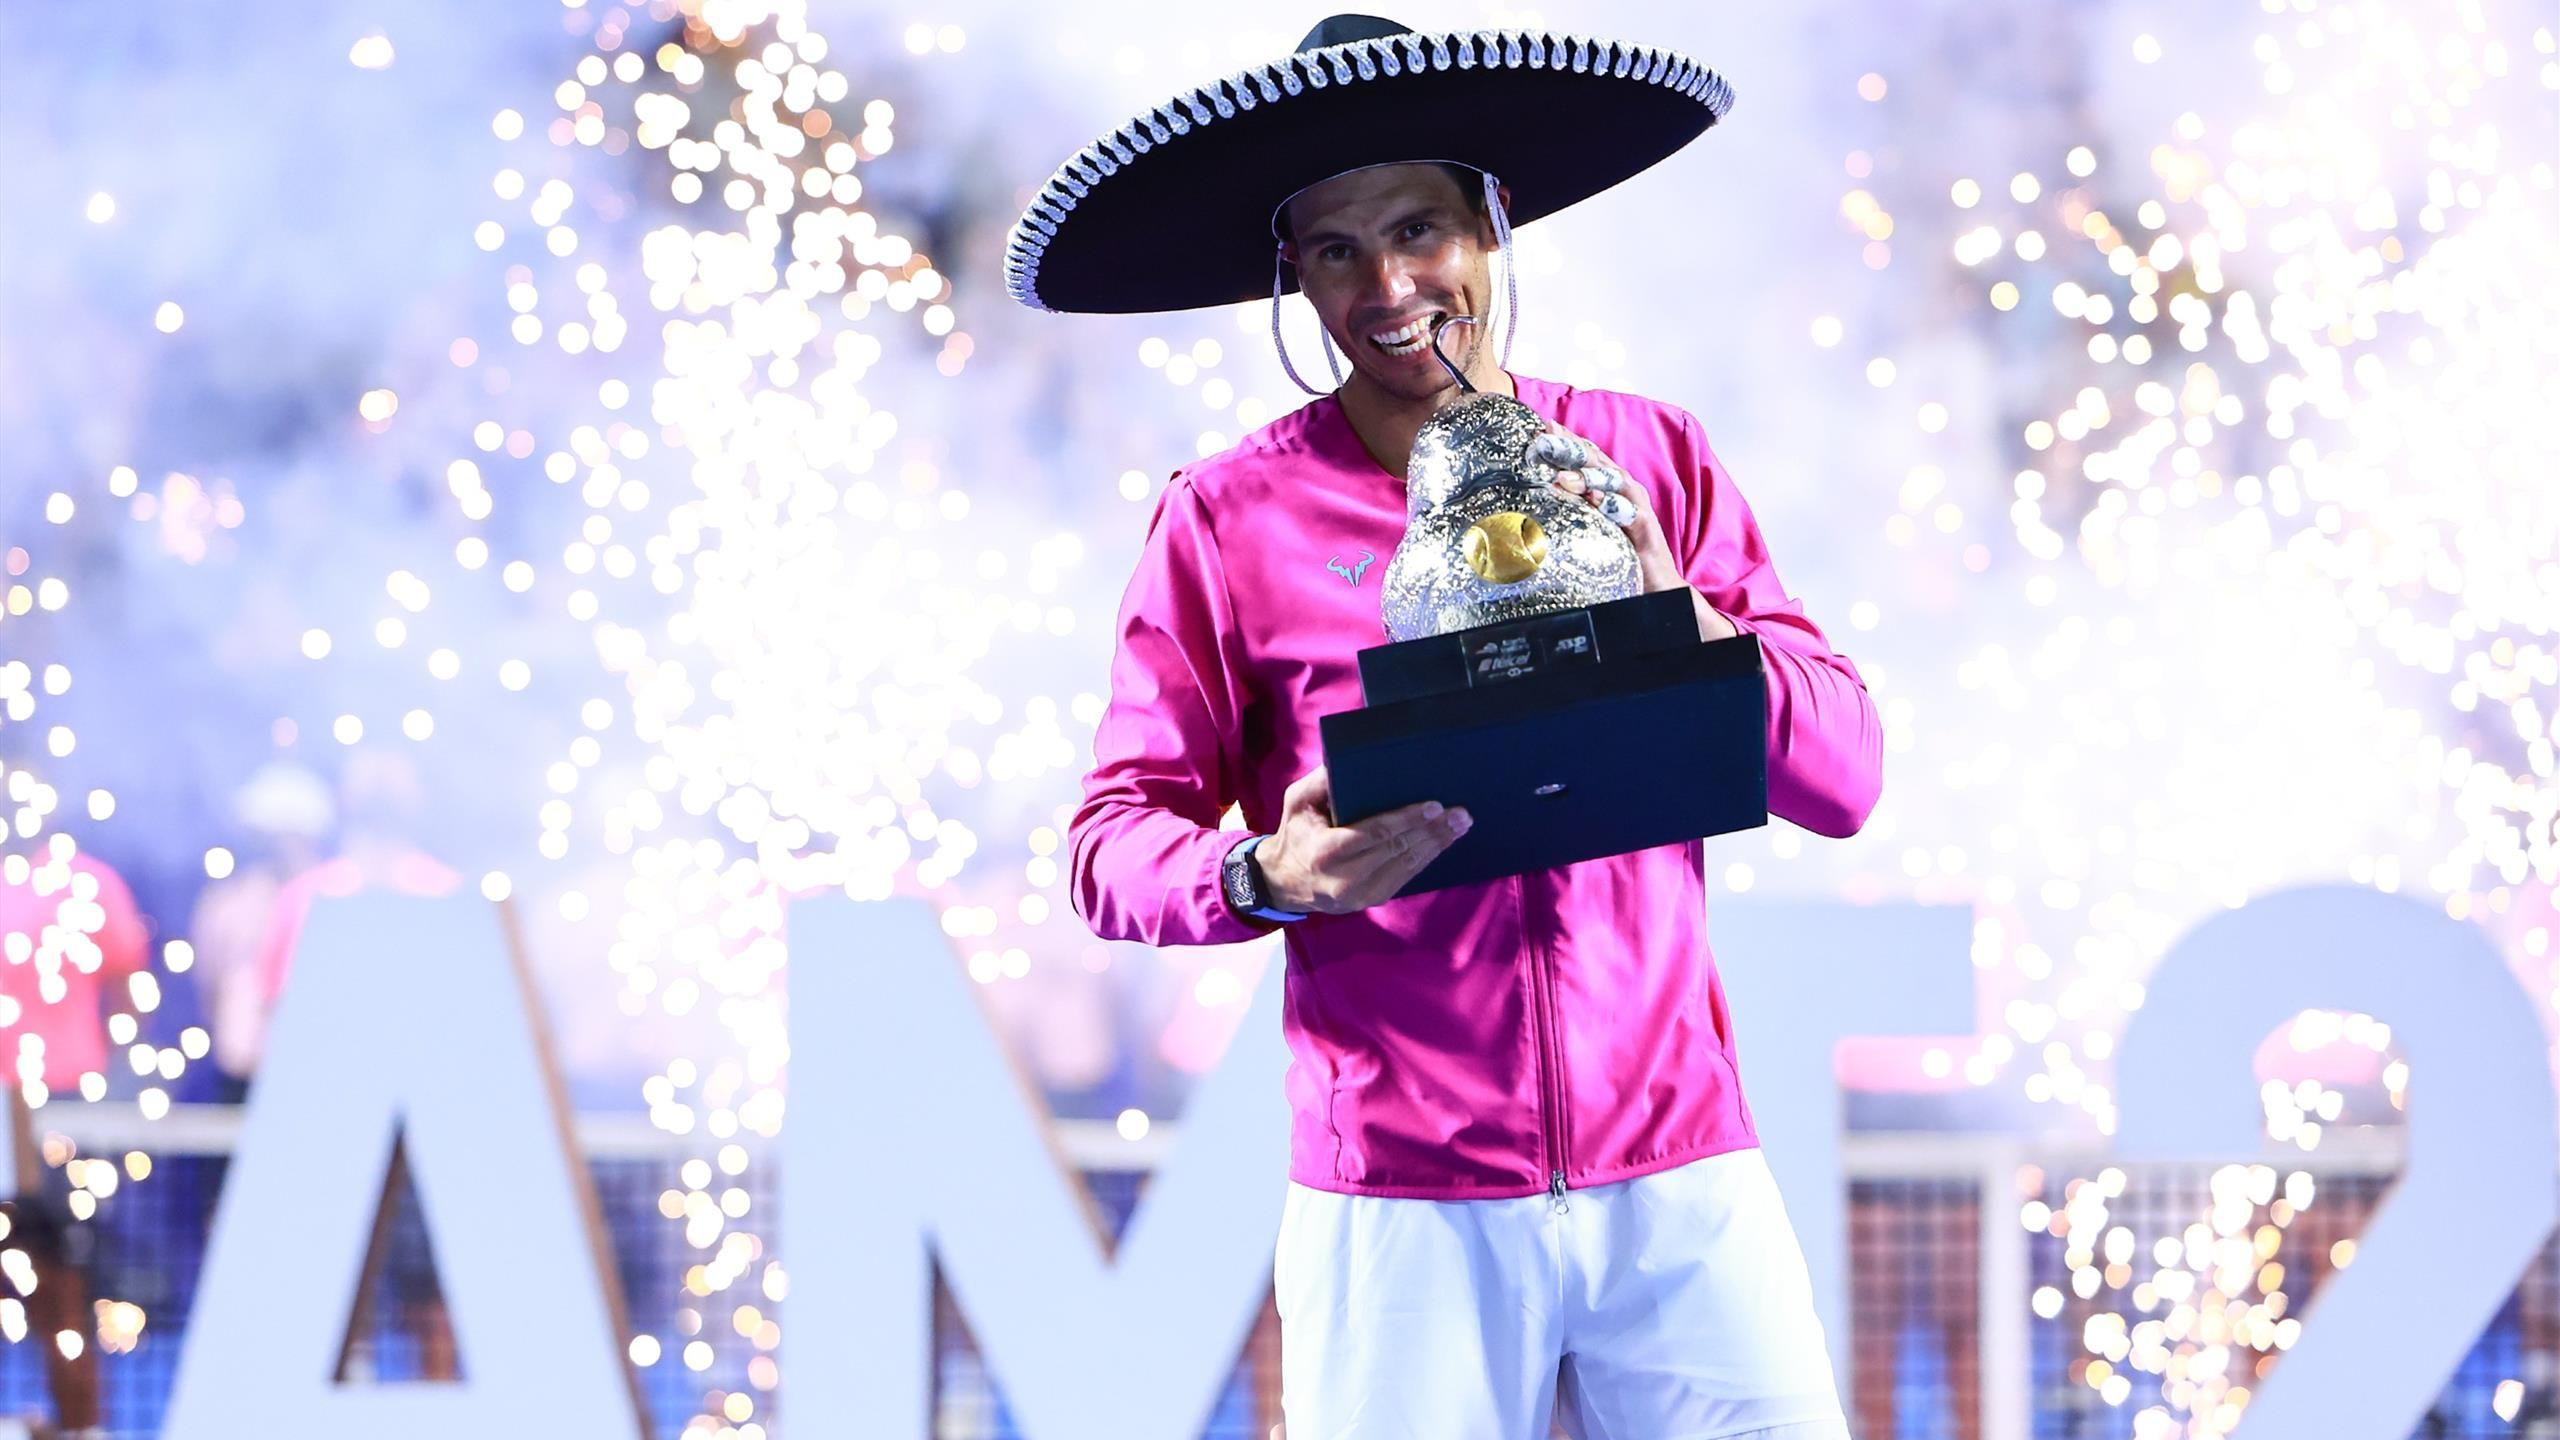 Rafael Nadal 2022: Rafael Nadal wins Mexican Open 2022_40.1